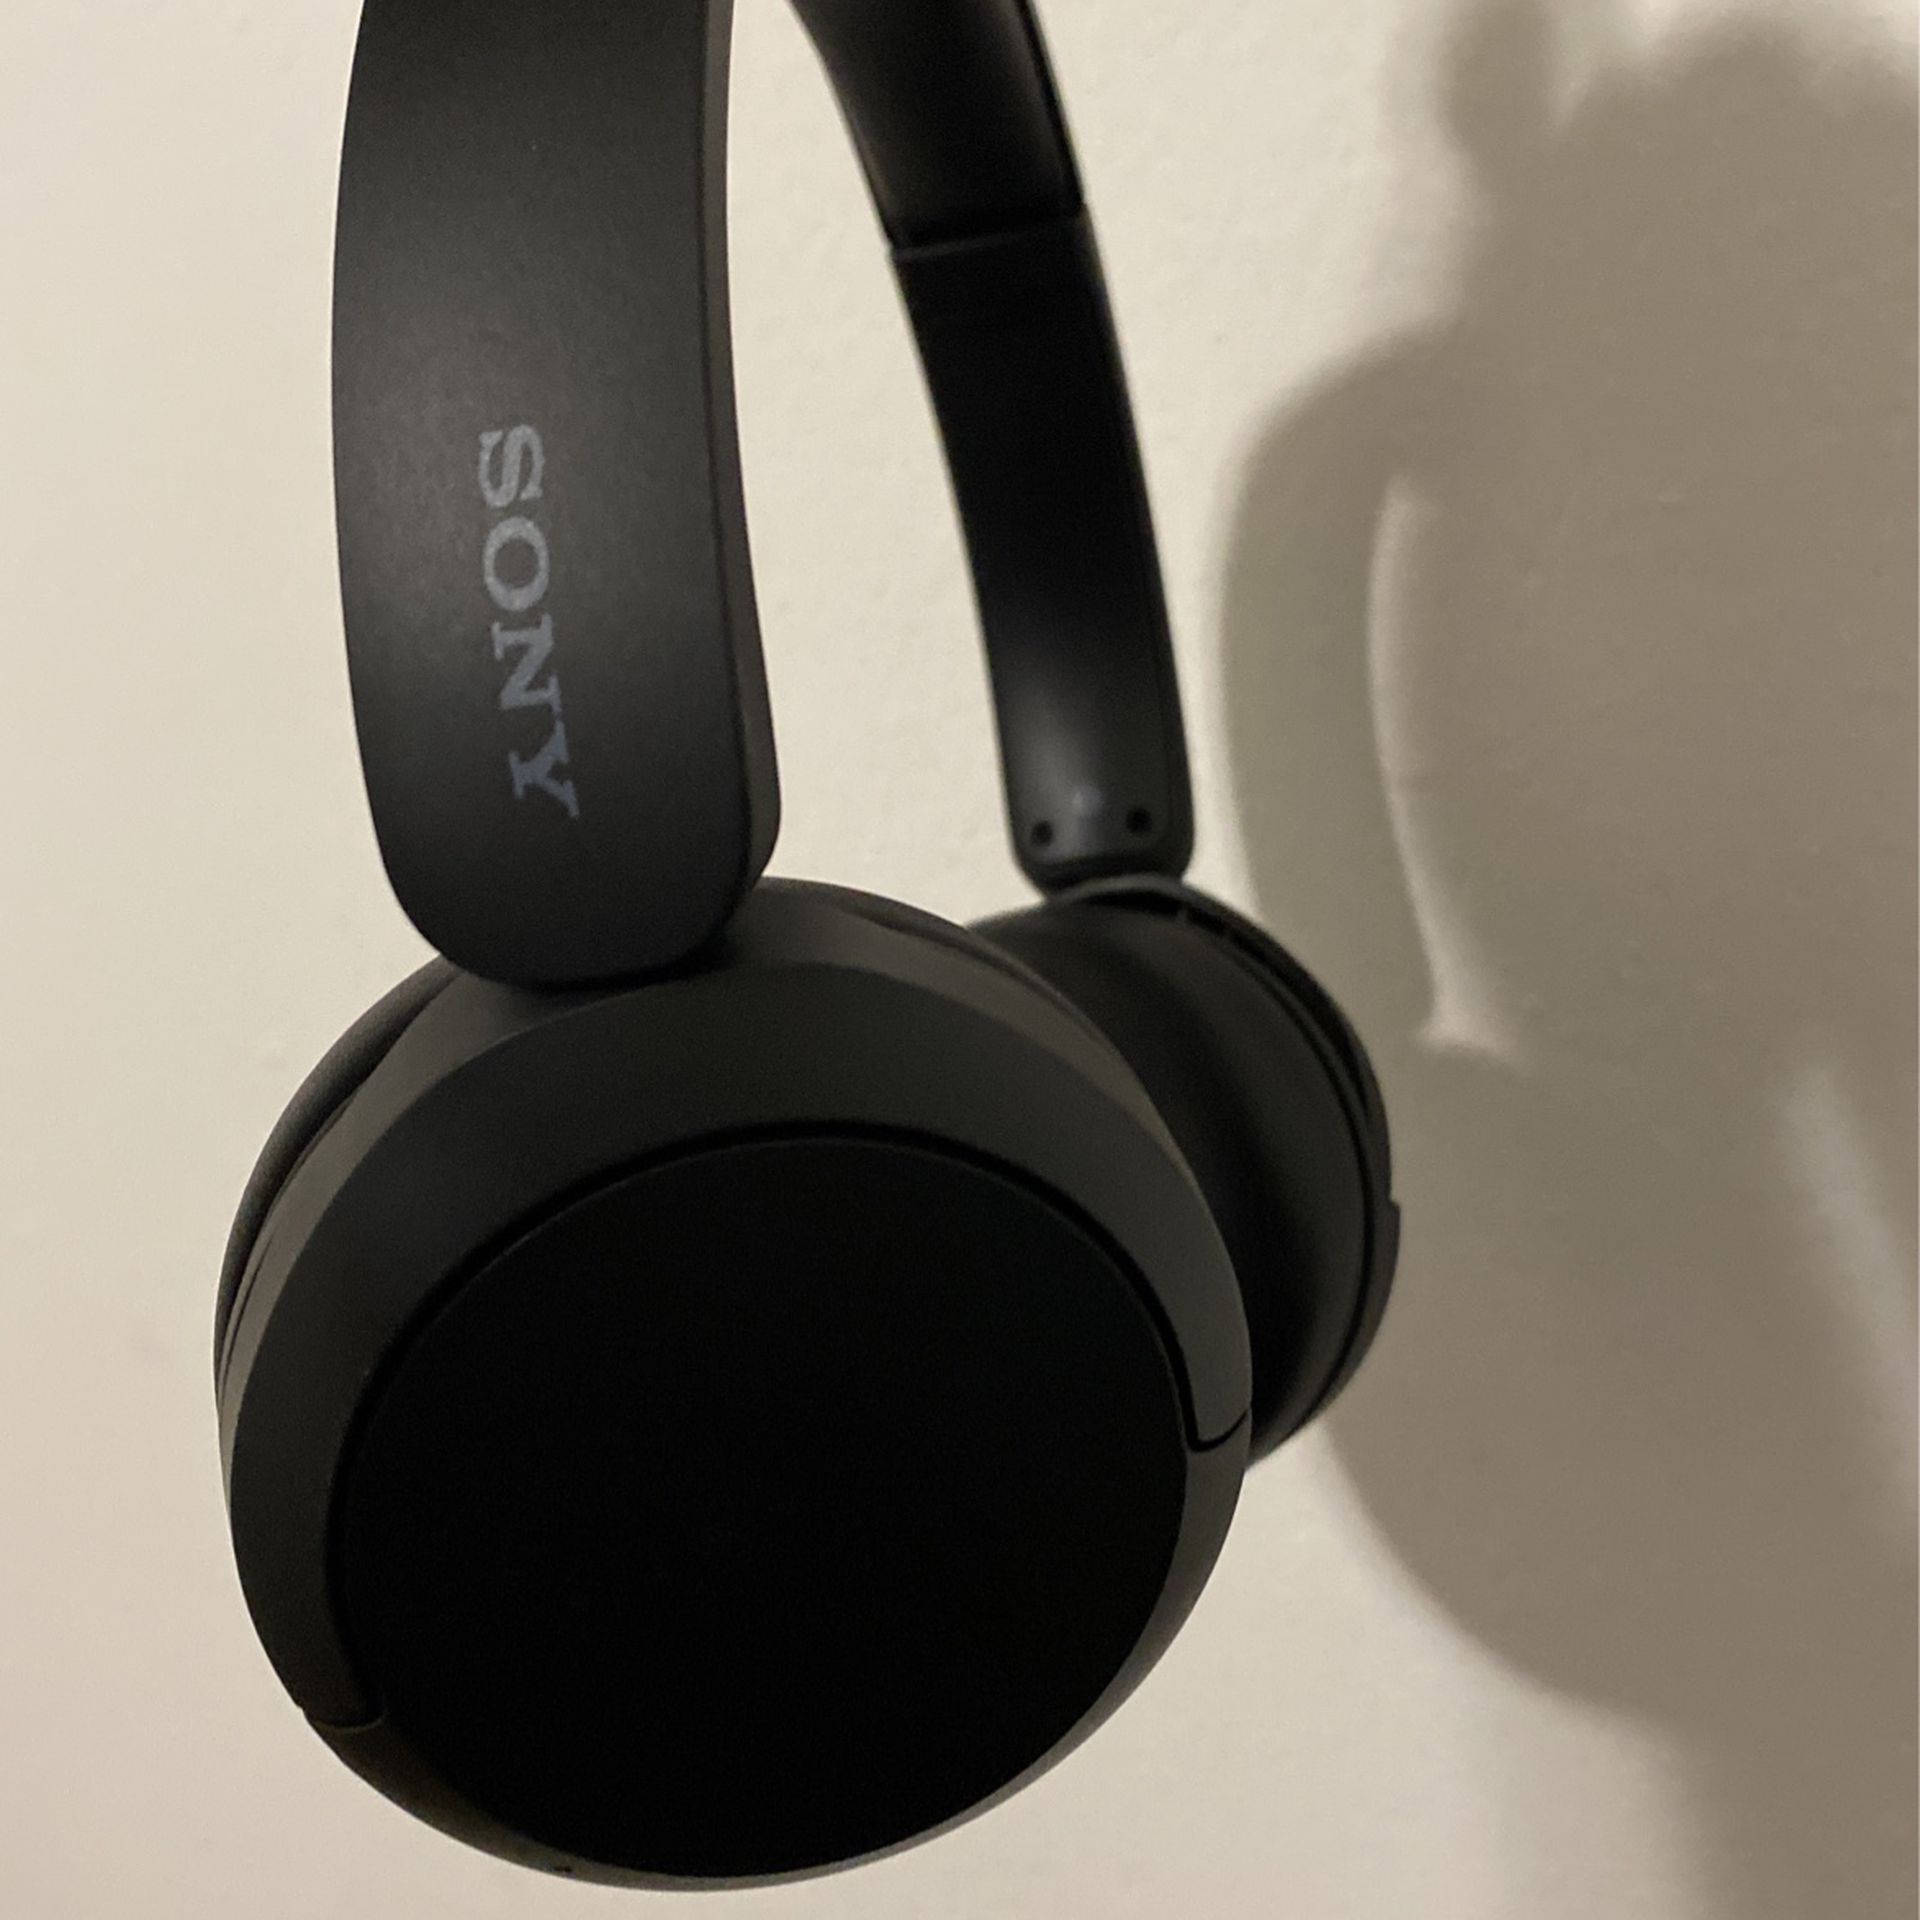  Bluetooth Sony Noise Canceling headphones 